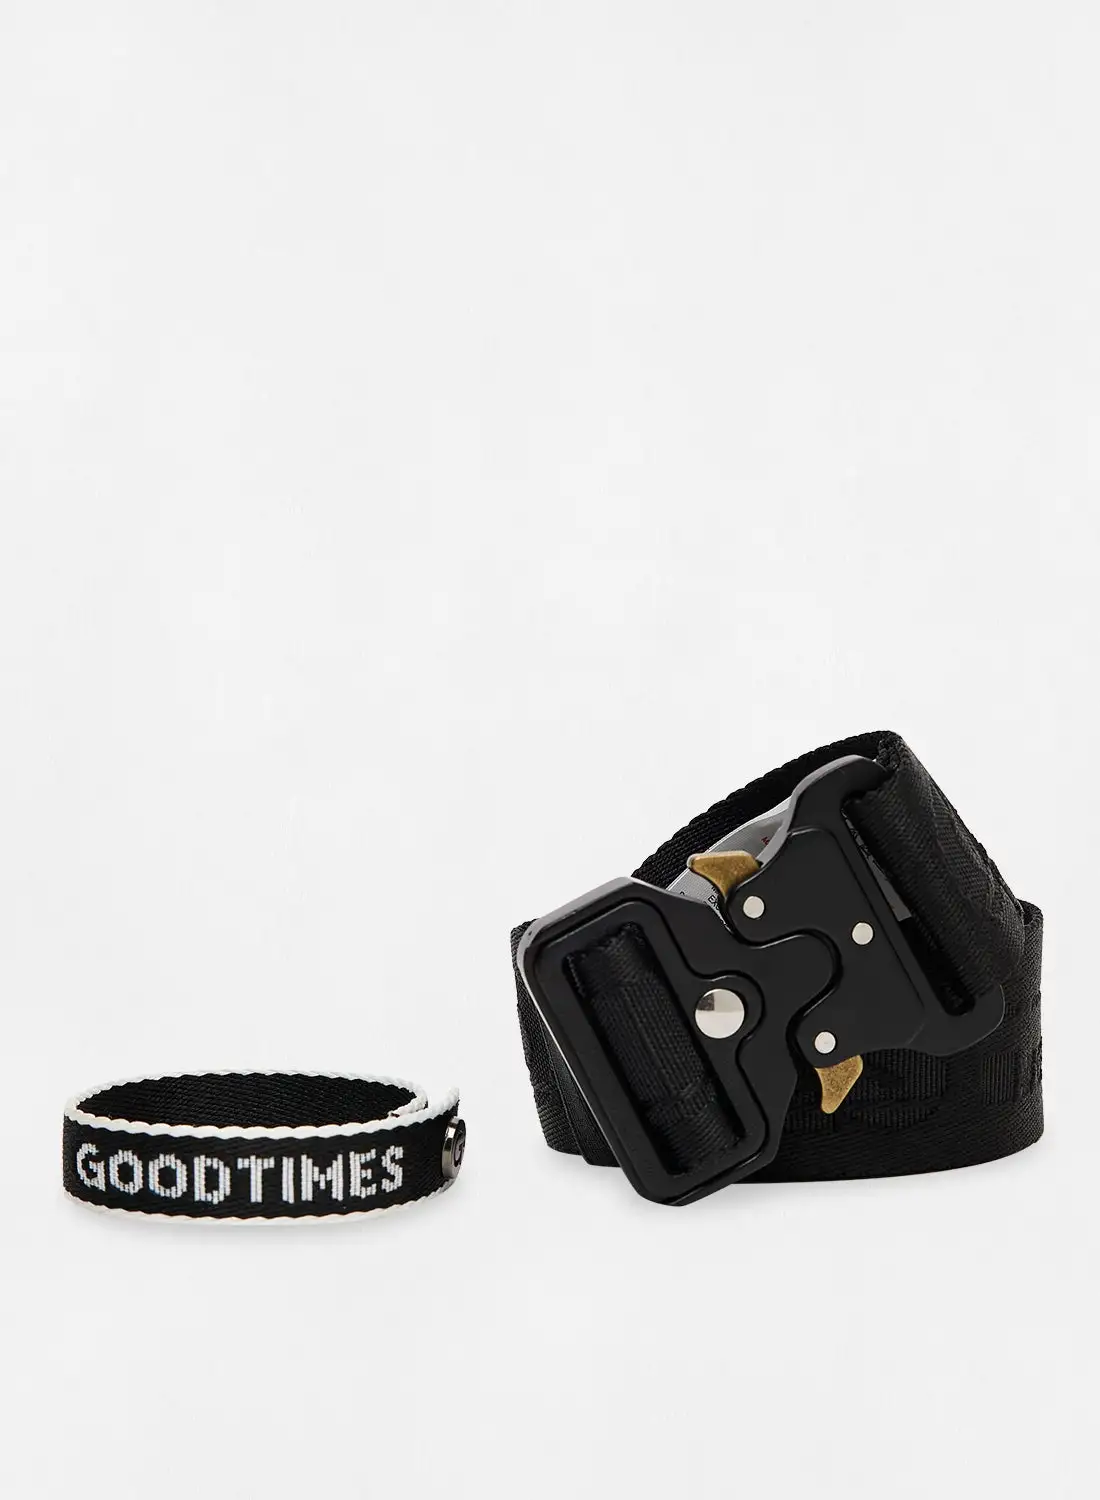 Goodtimes Orion Tech Belt and Bracelet Set Black